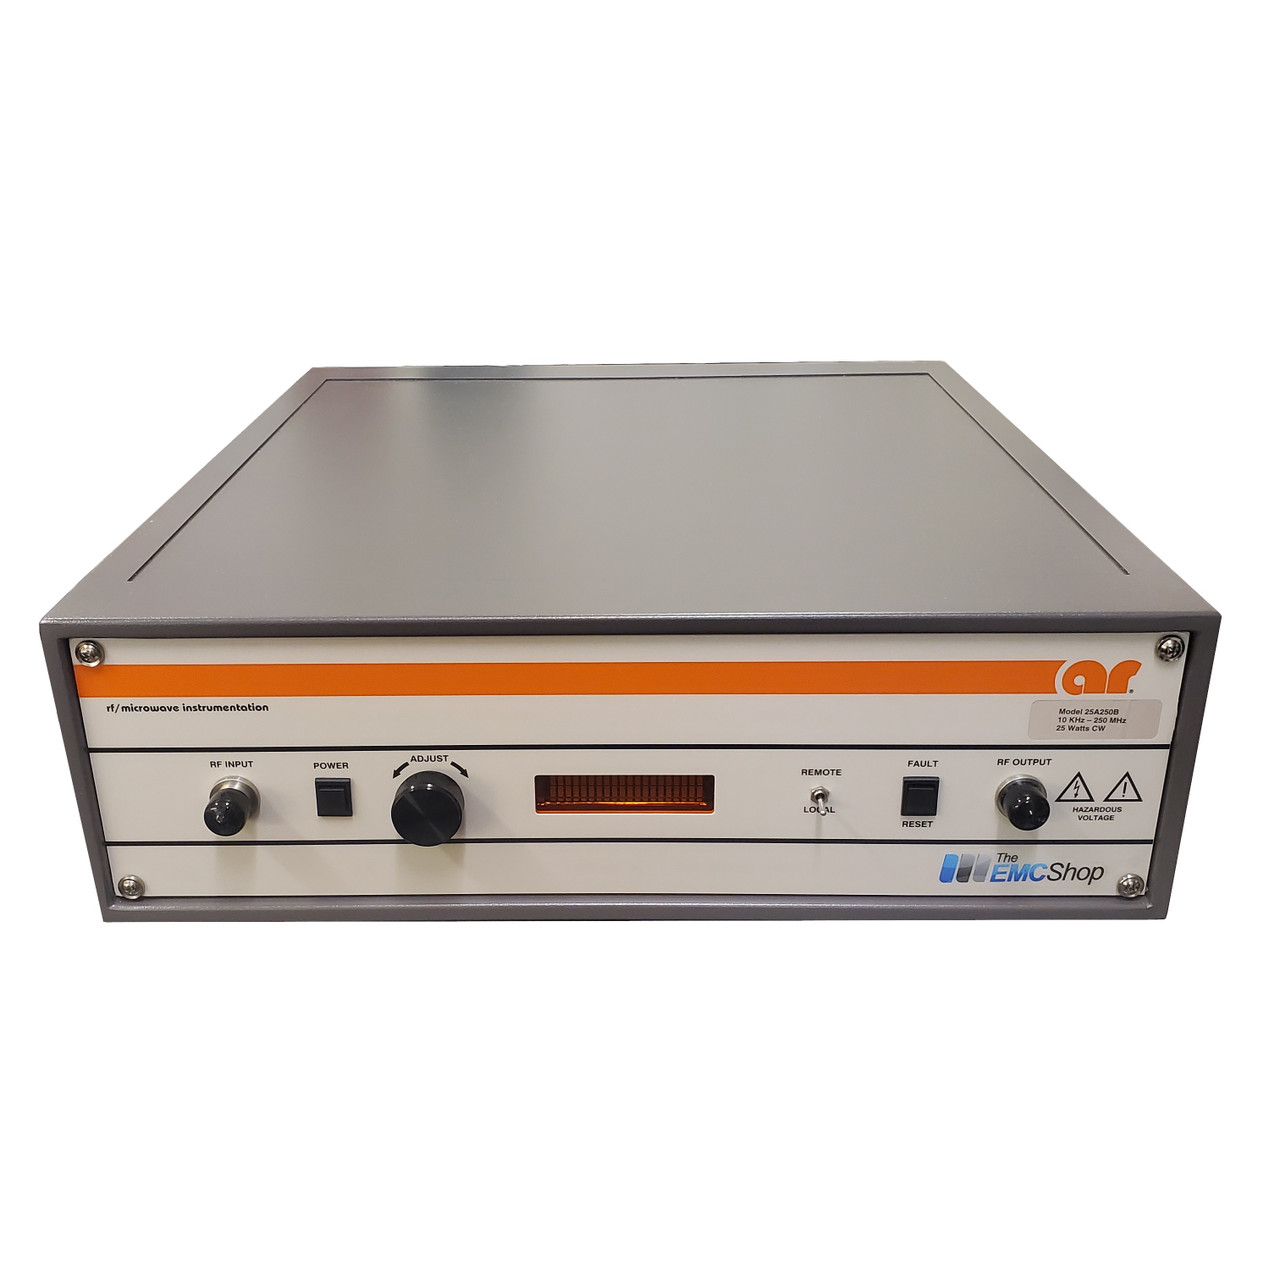 Amplifier Research 25A250B 10kHz - 250MHz, 25 Watt CW RF Amplifier